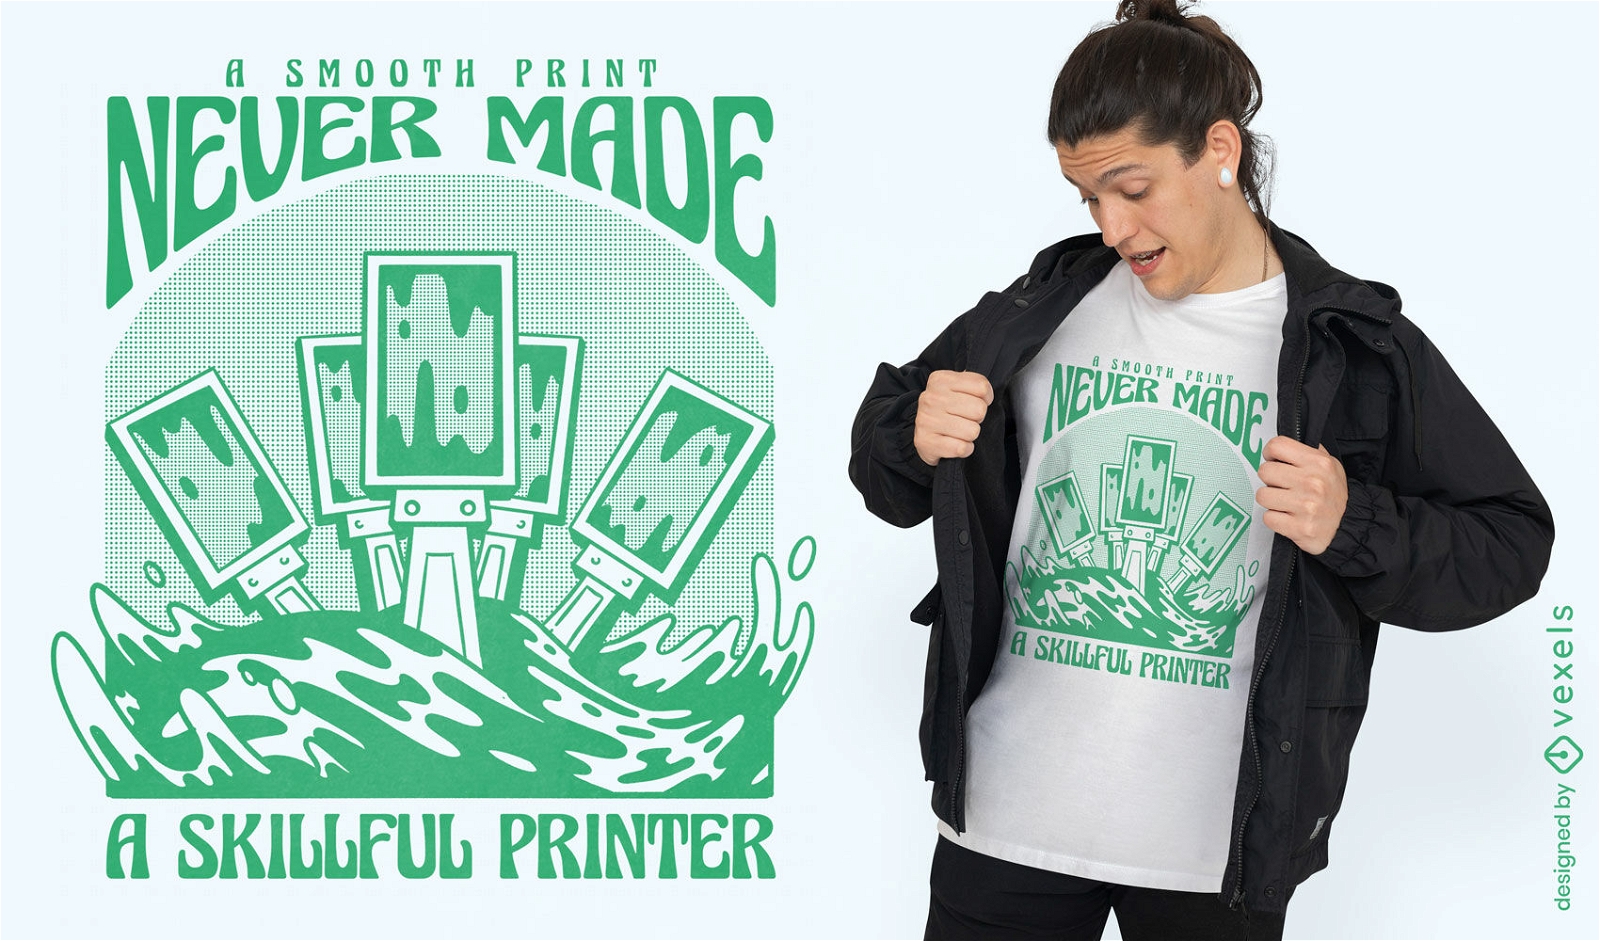 Printer machine equipment t-shirt design